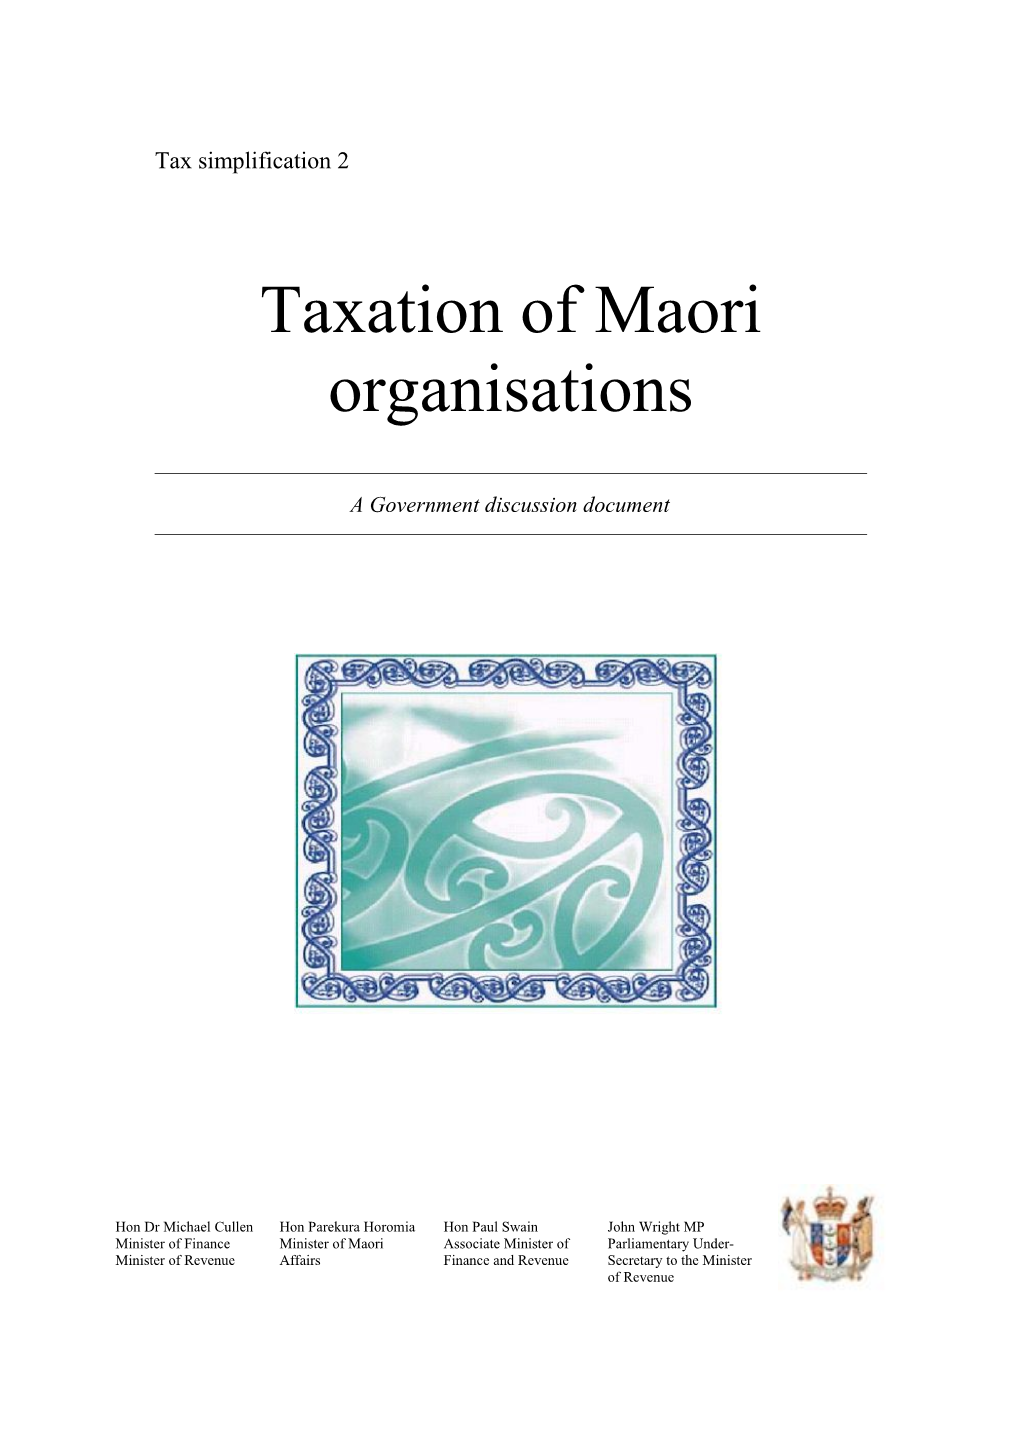 Taxation of Maori Organisations